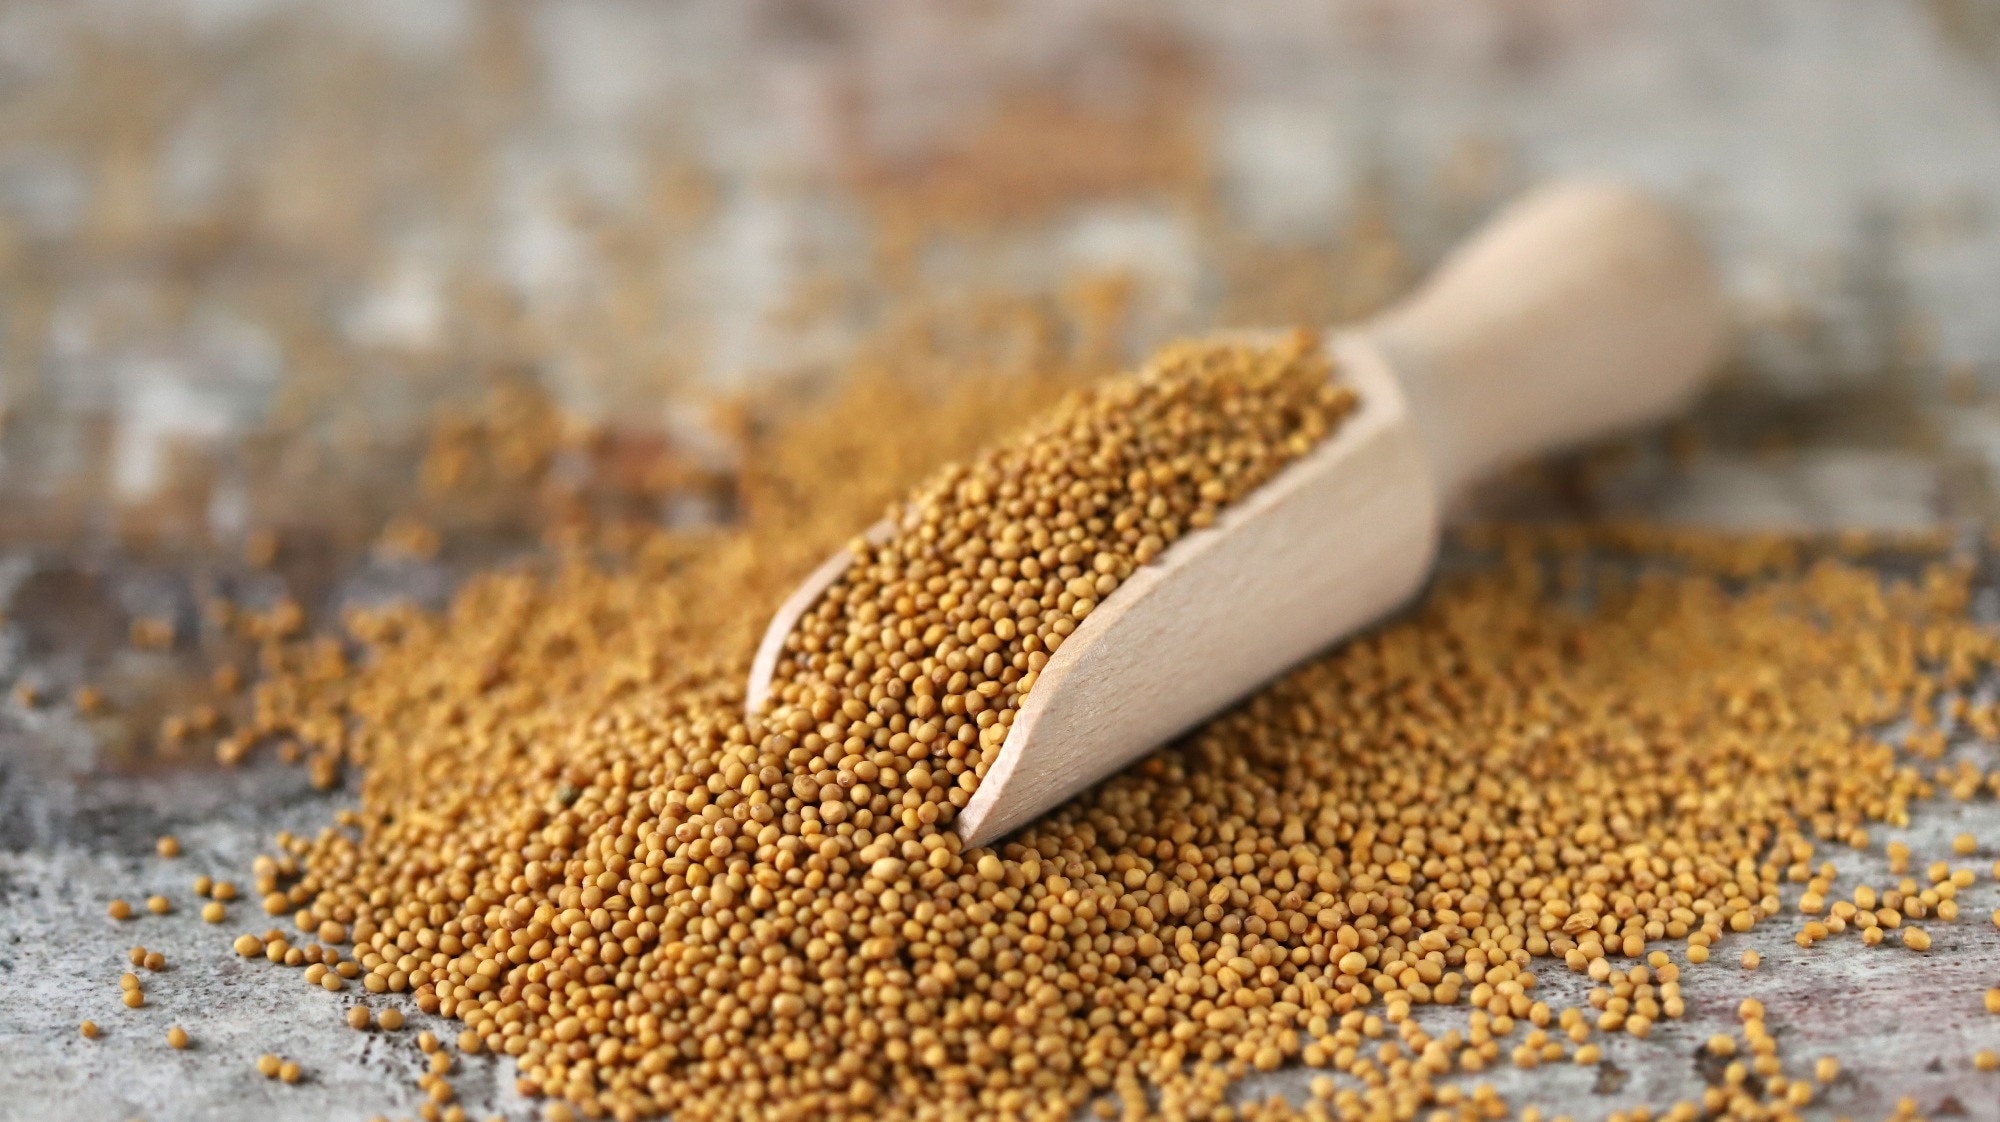 Mustard seeds. Image Credit: Sunvic / Shutterstock